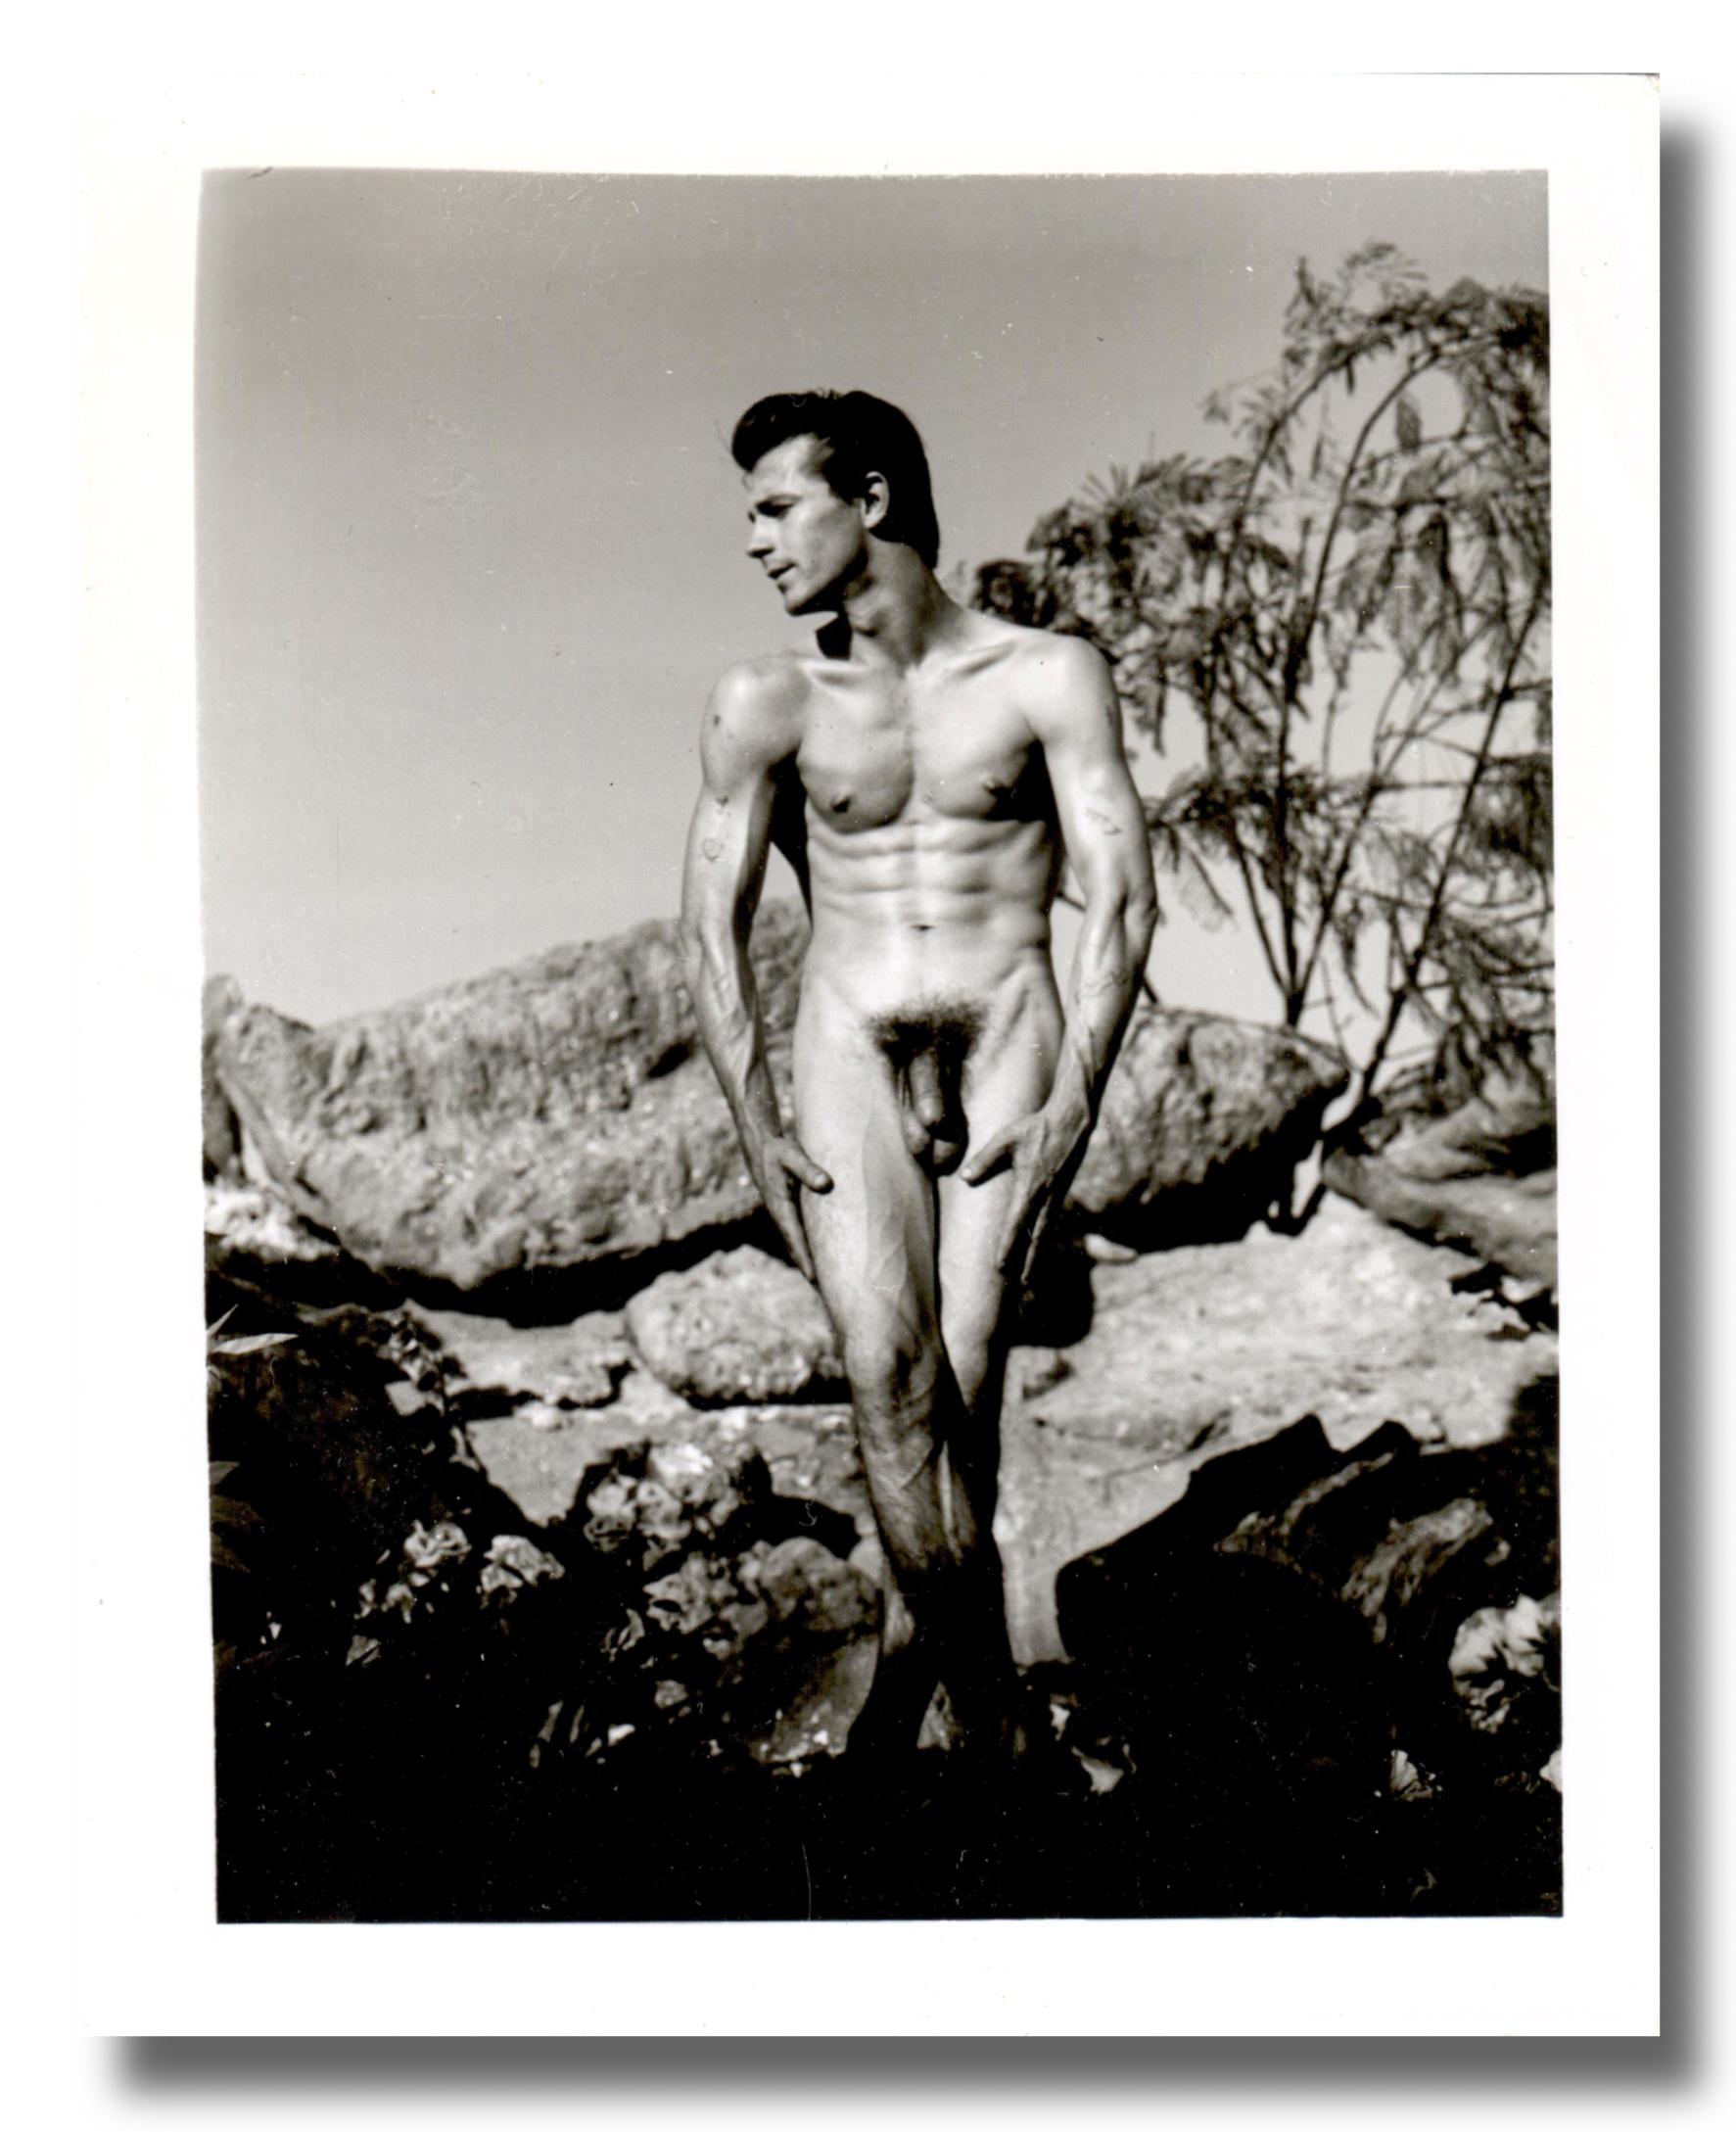 Bob Mizer Nude Photograph - 1960s Gelatin Silver Print - Original Photograph - AMG Los Angeles - Genuine